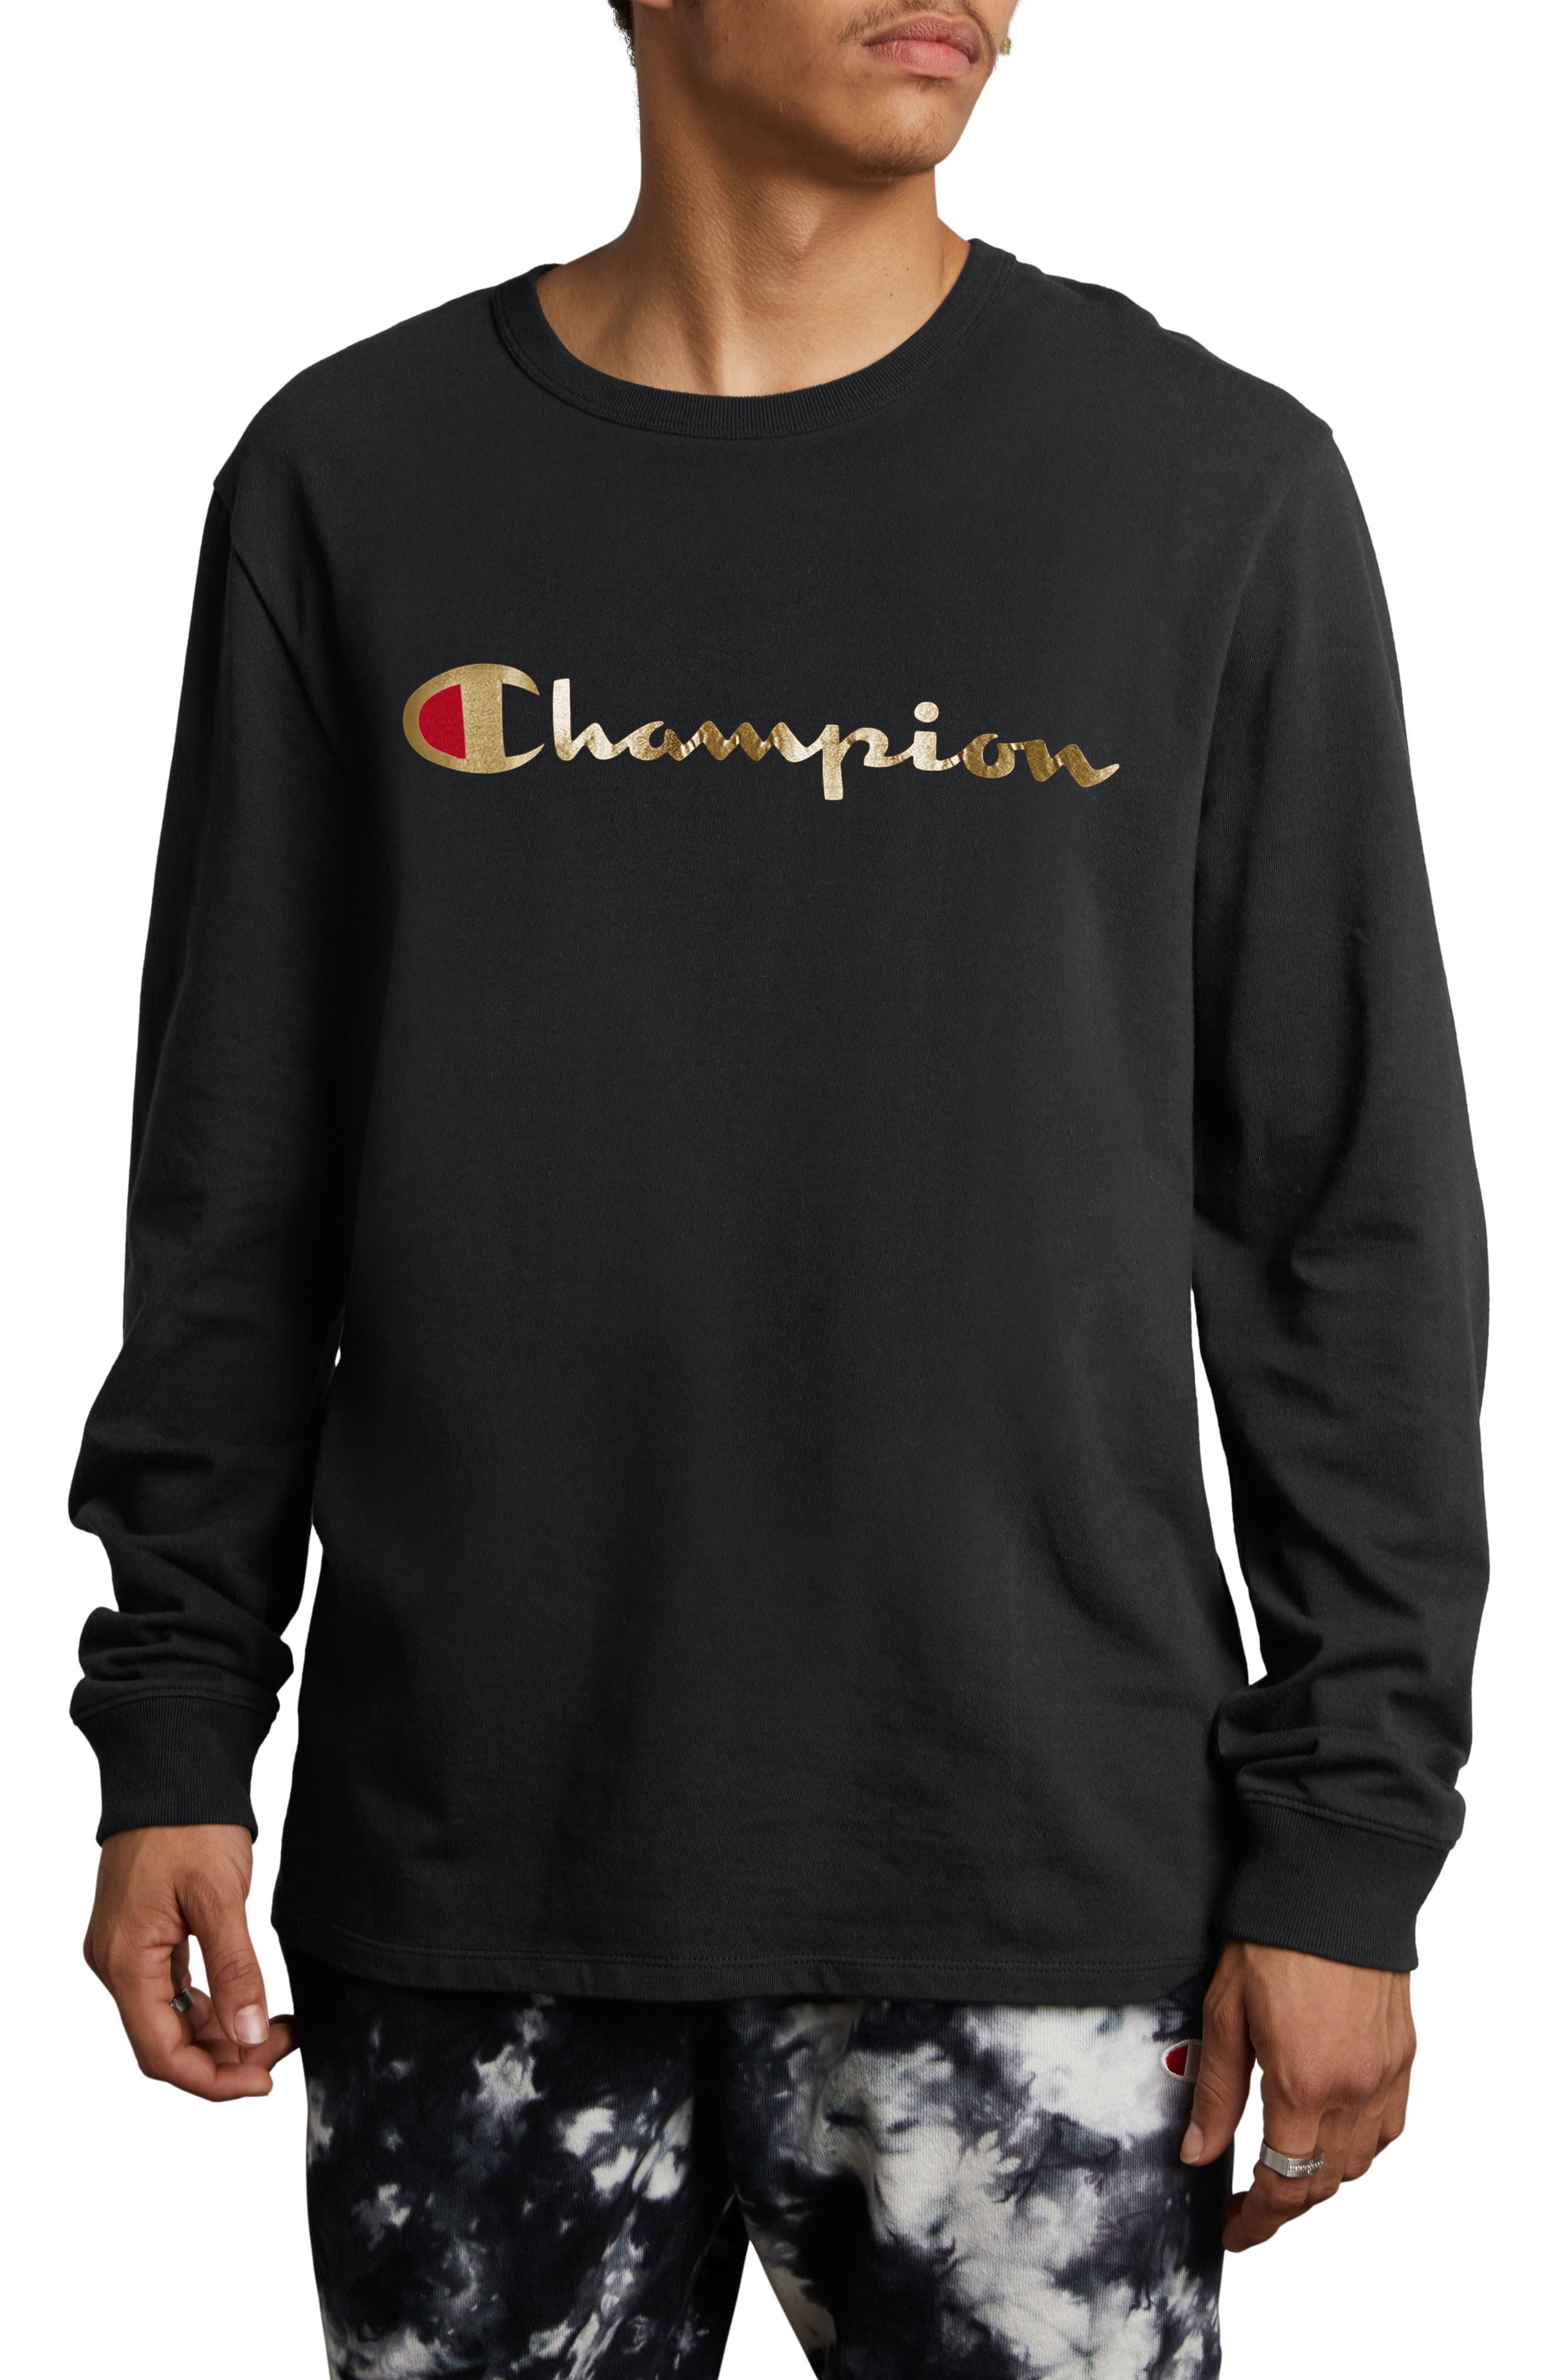 champion shirt black and gold